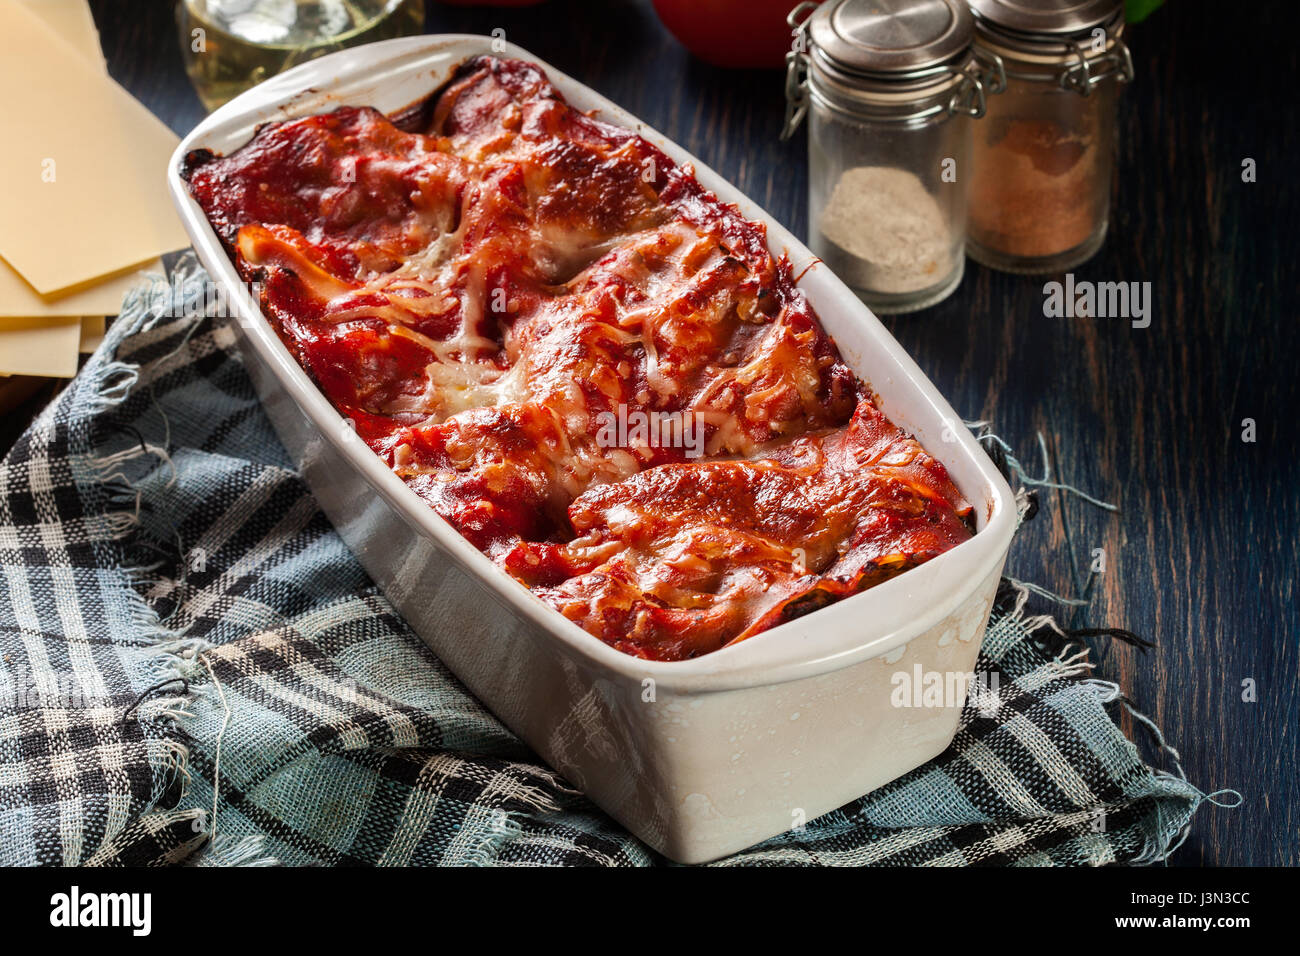 Hot tasty lasagna with spinach in ceramic casserole dish. Italian cuisine. Stock Photo